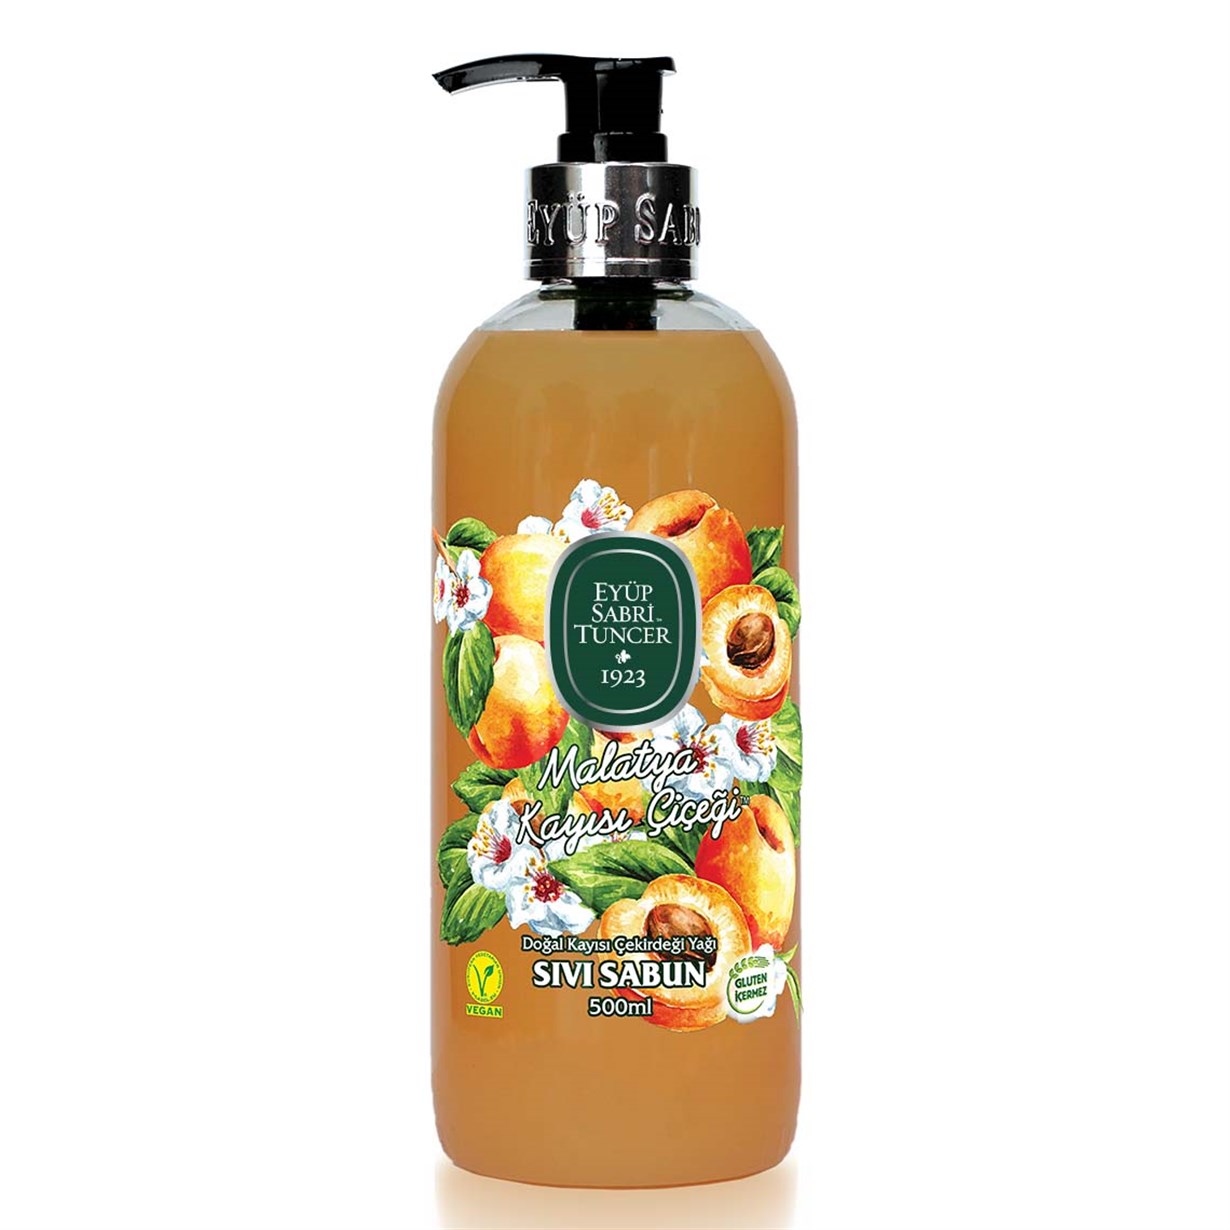 EST Malatya Apricot Blossom Natural Apricot Seed Oil Soap